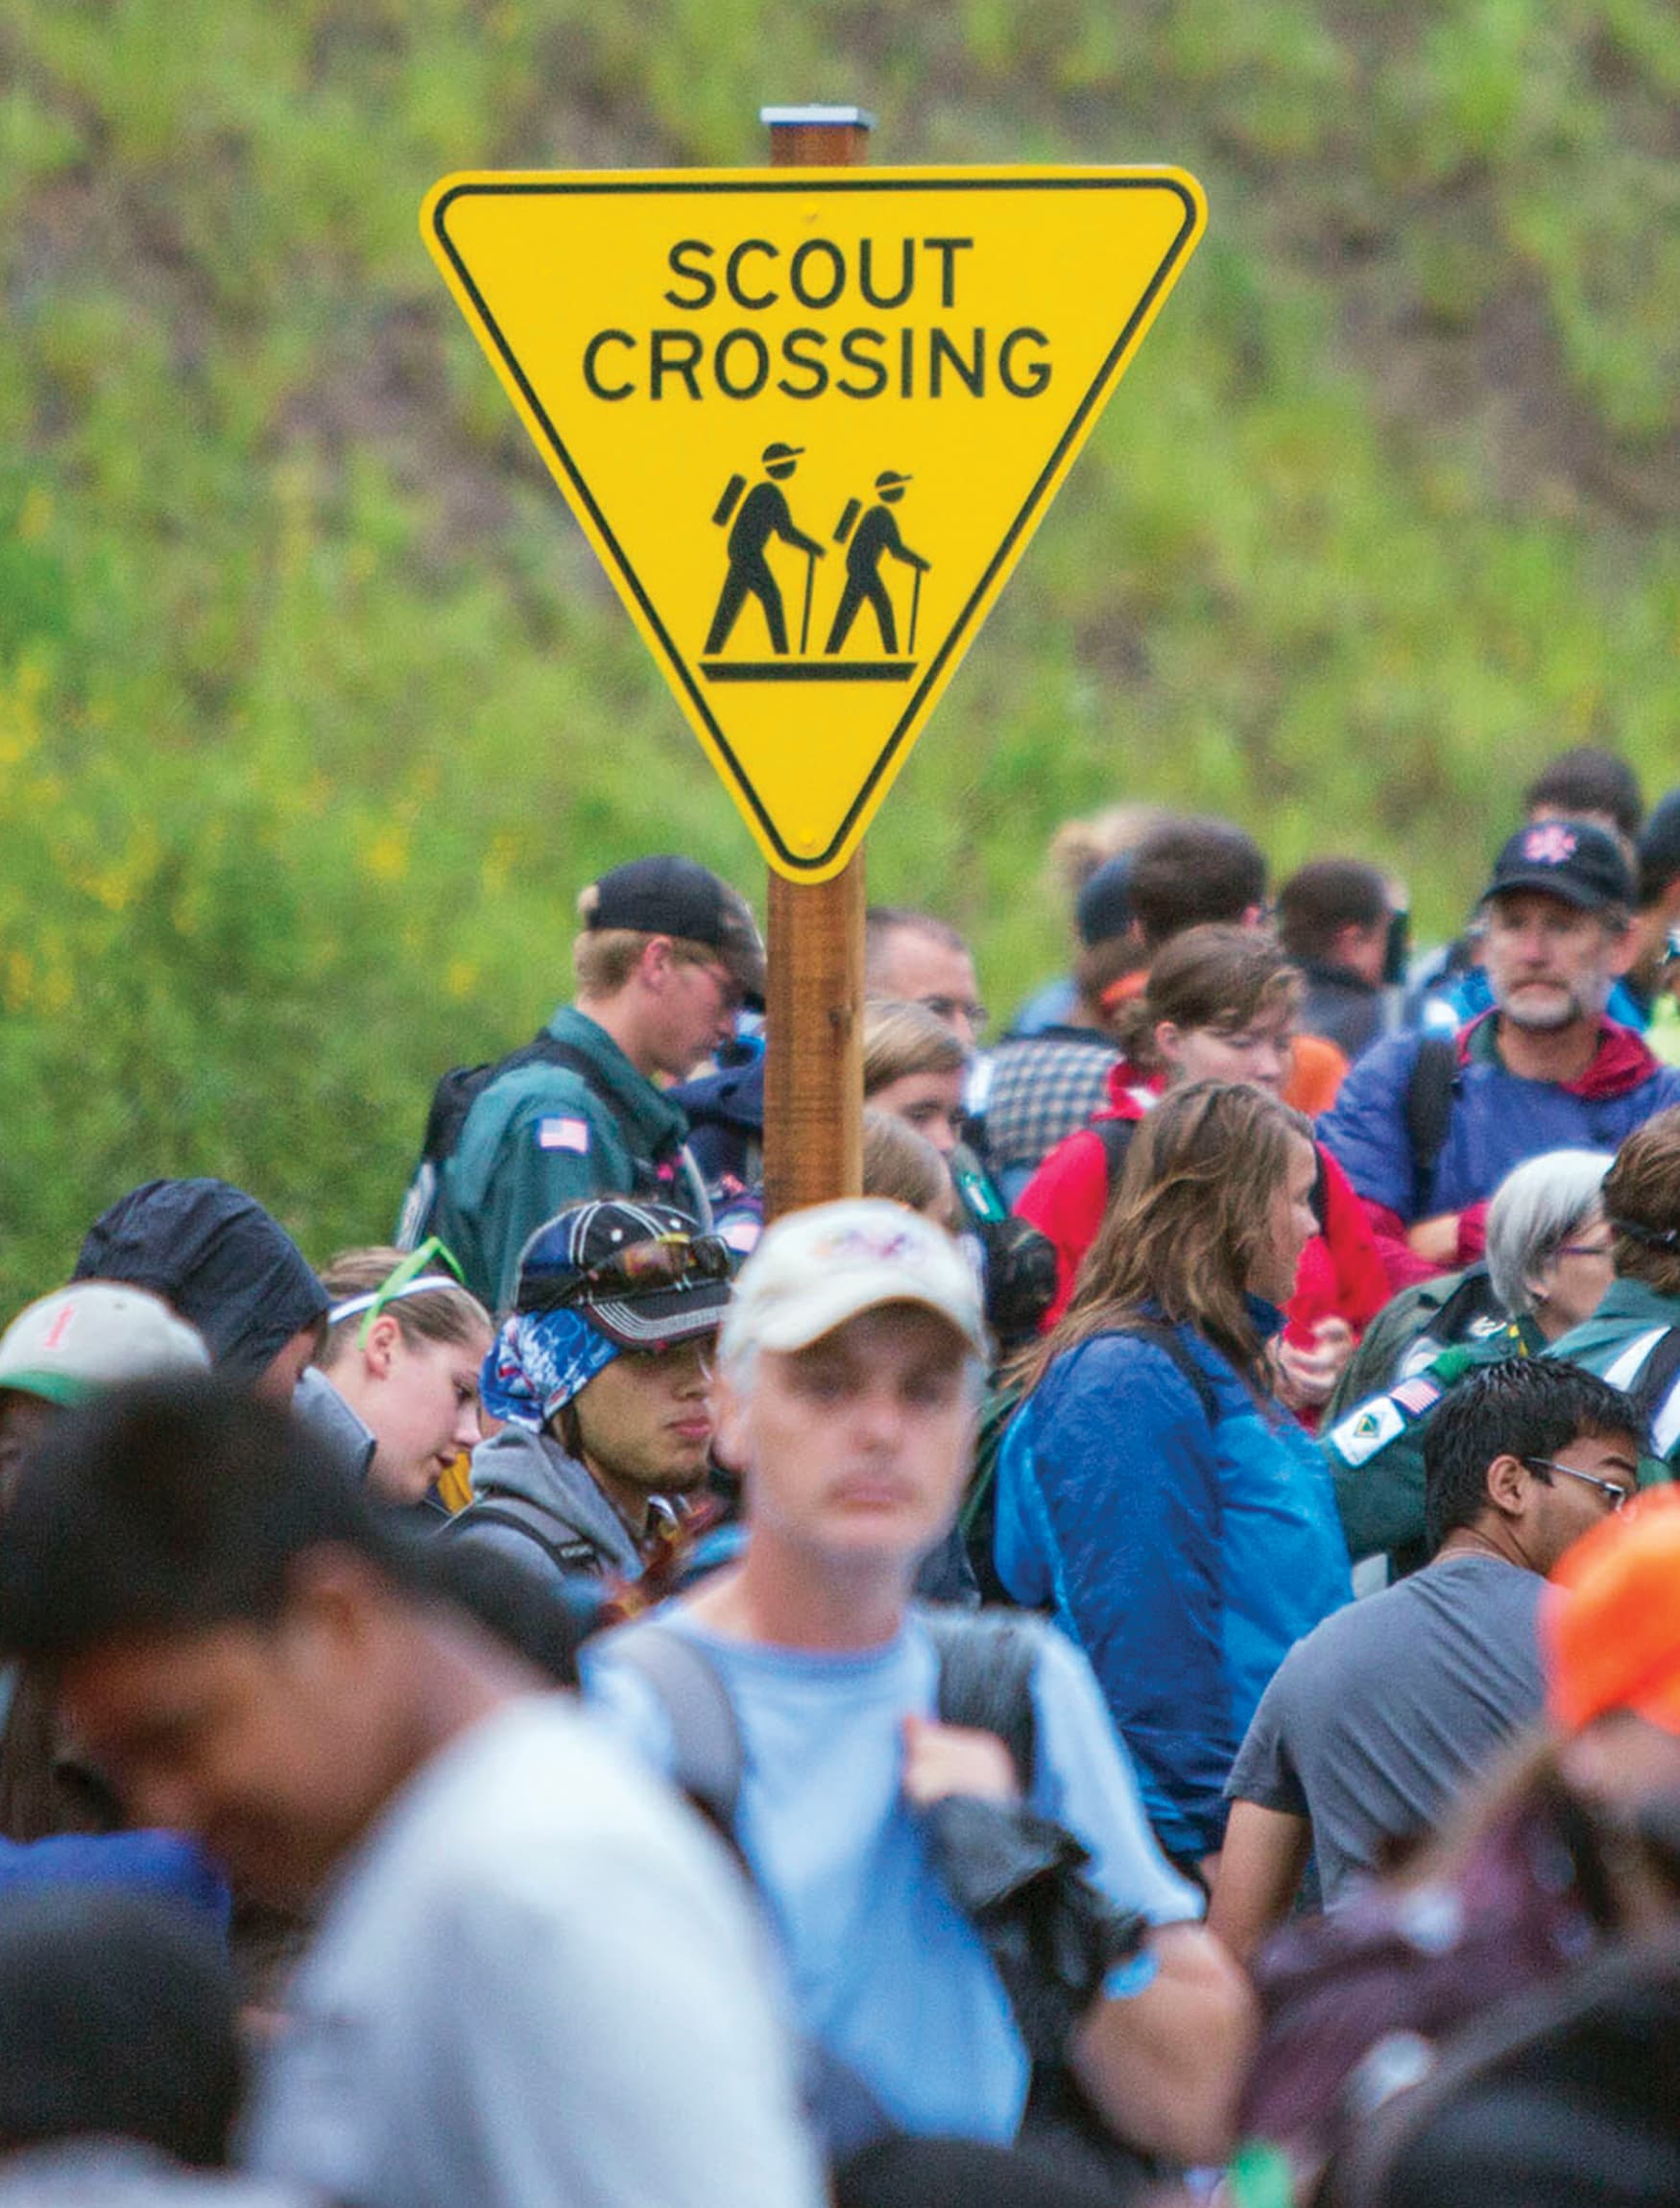 Boy Scouts of America, The Summit Bechtel Reserve enhanced regulatory sign design